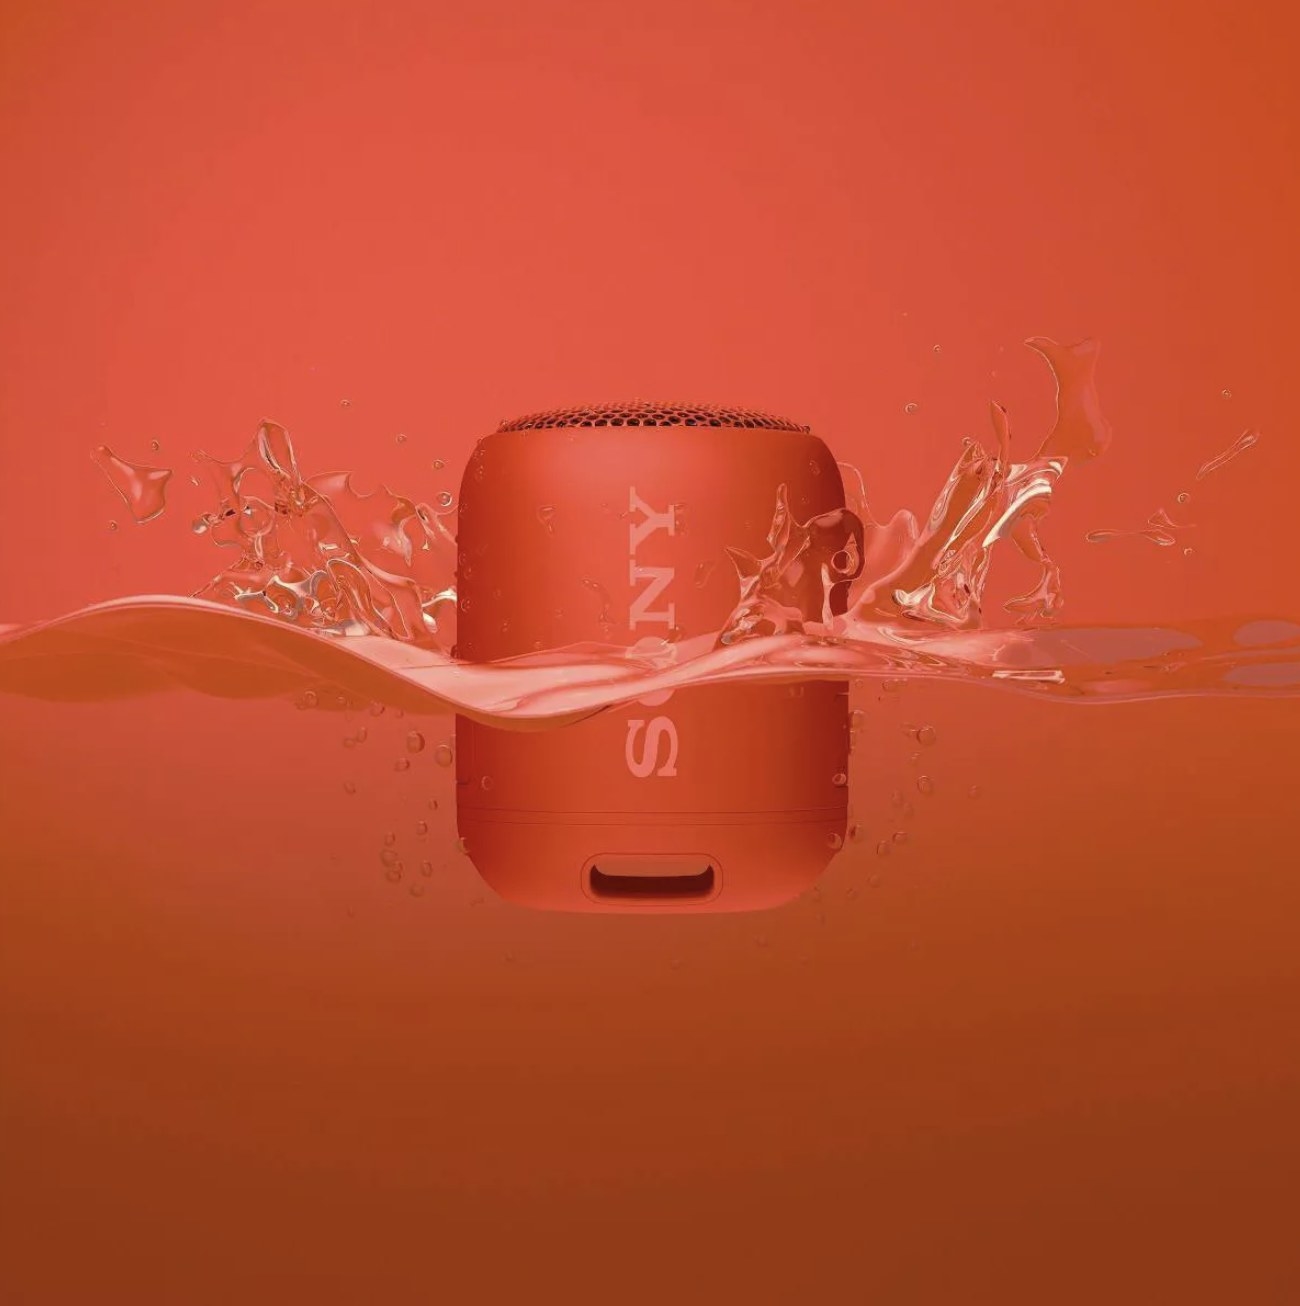 A red Bluetooth Speaker